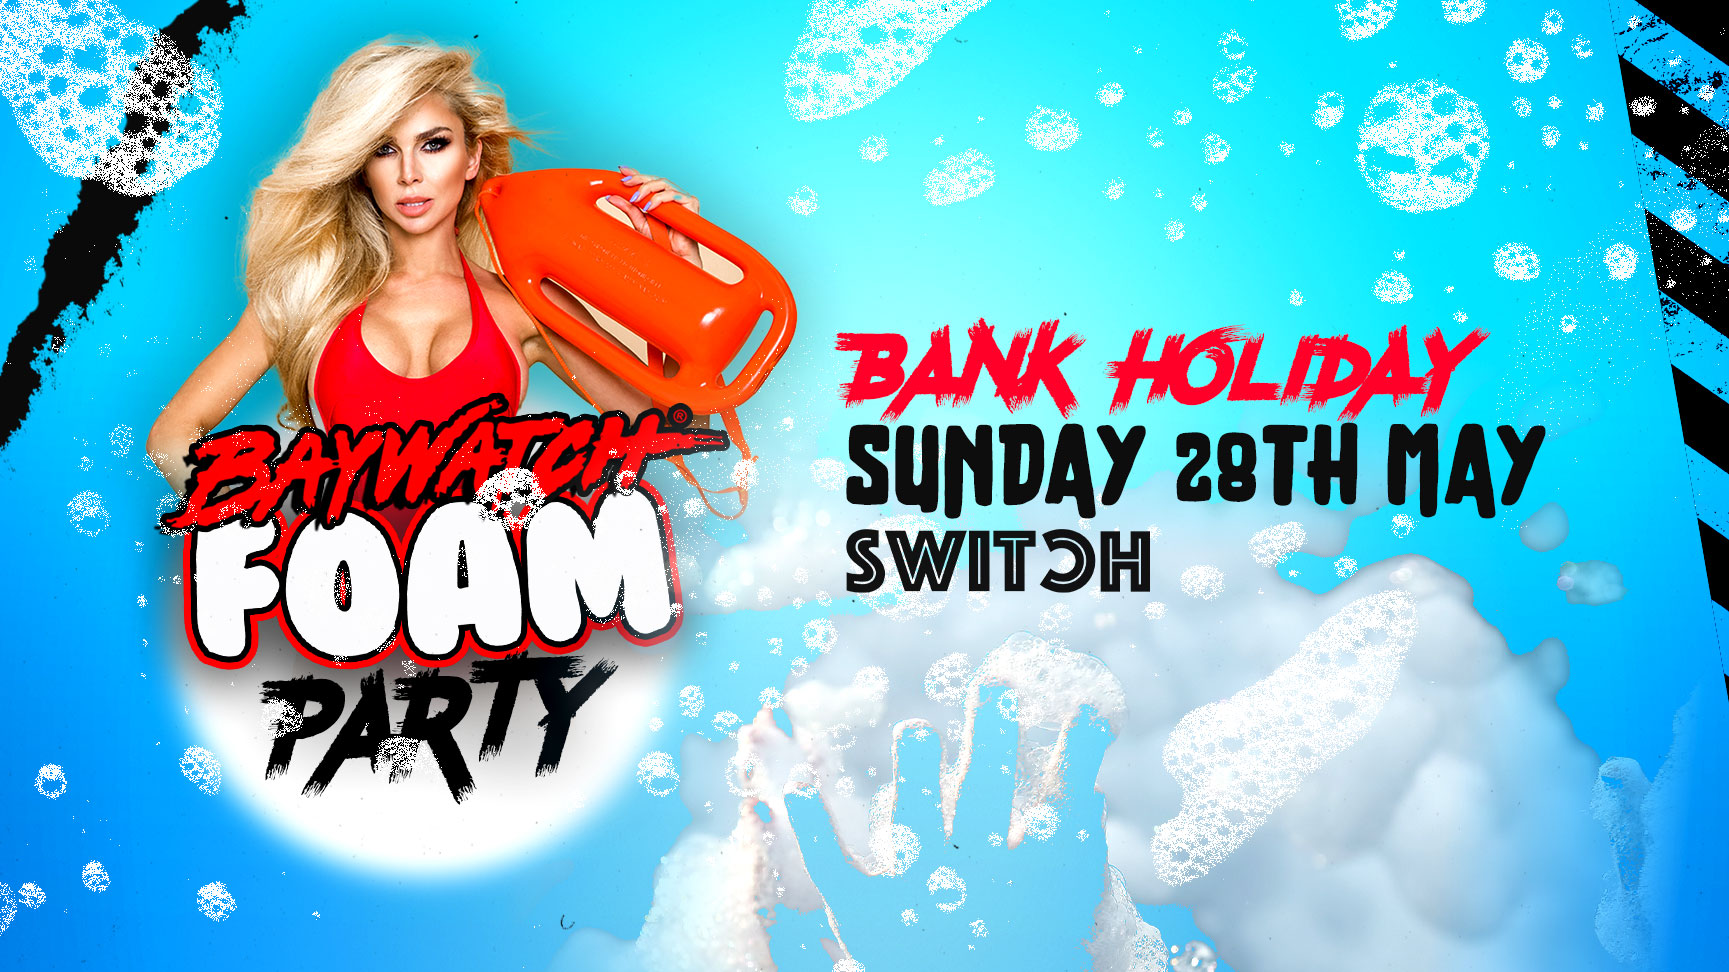 BANK HOLIDAY SUNDAY | BAYWATCH FOAM PARTY